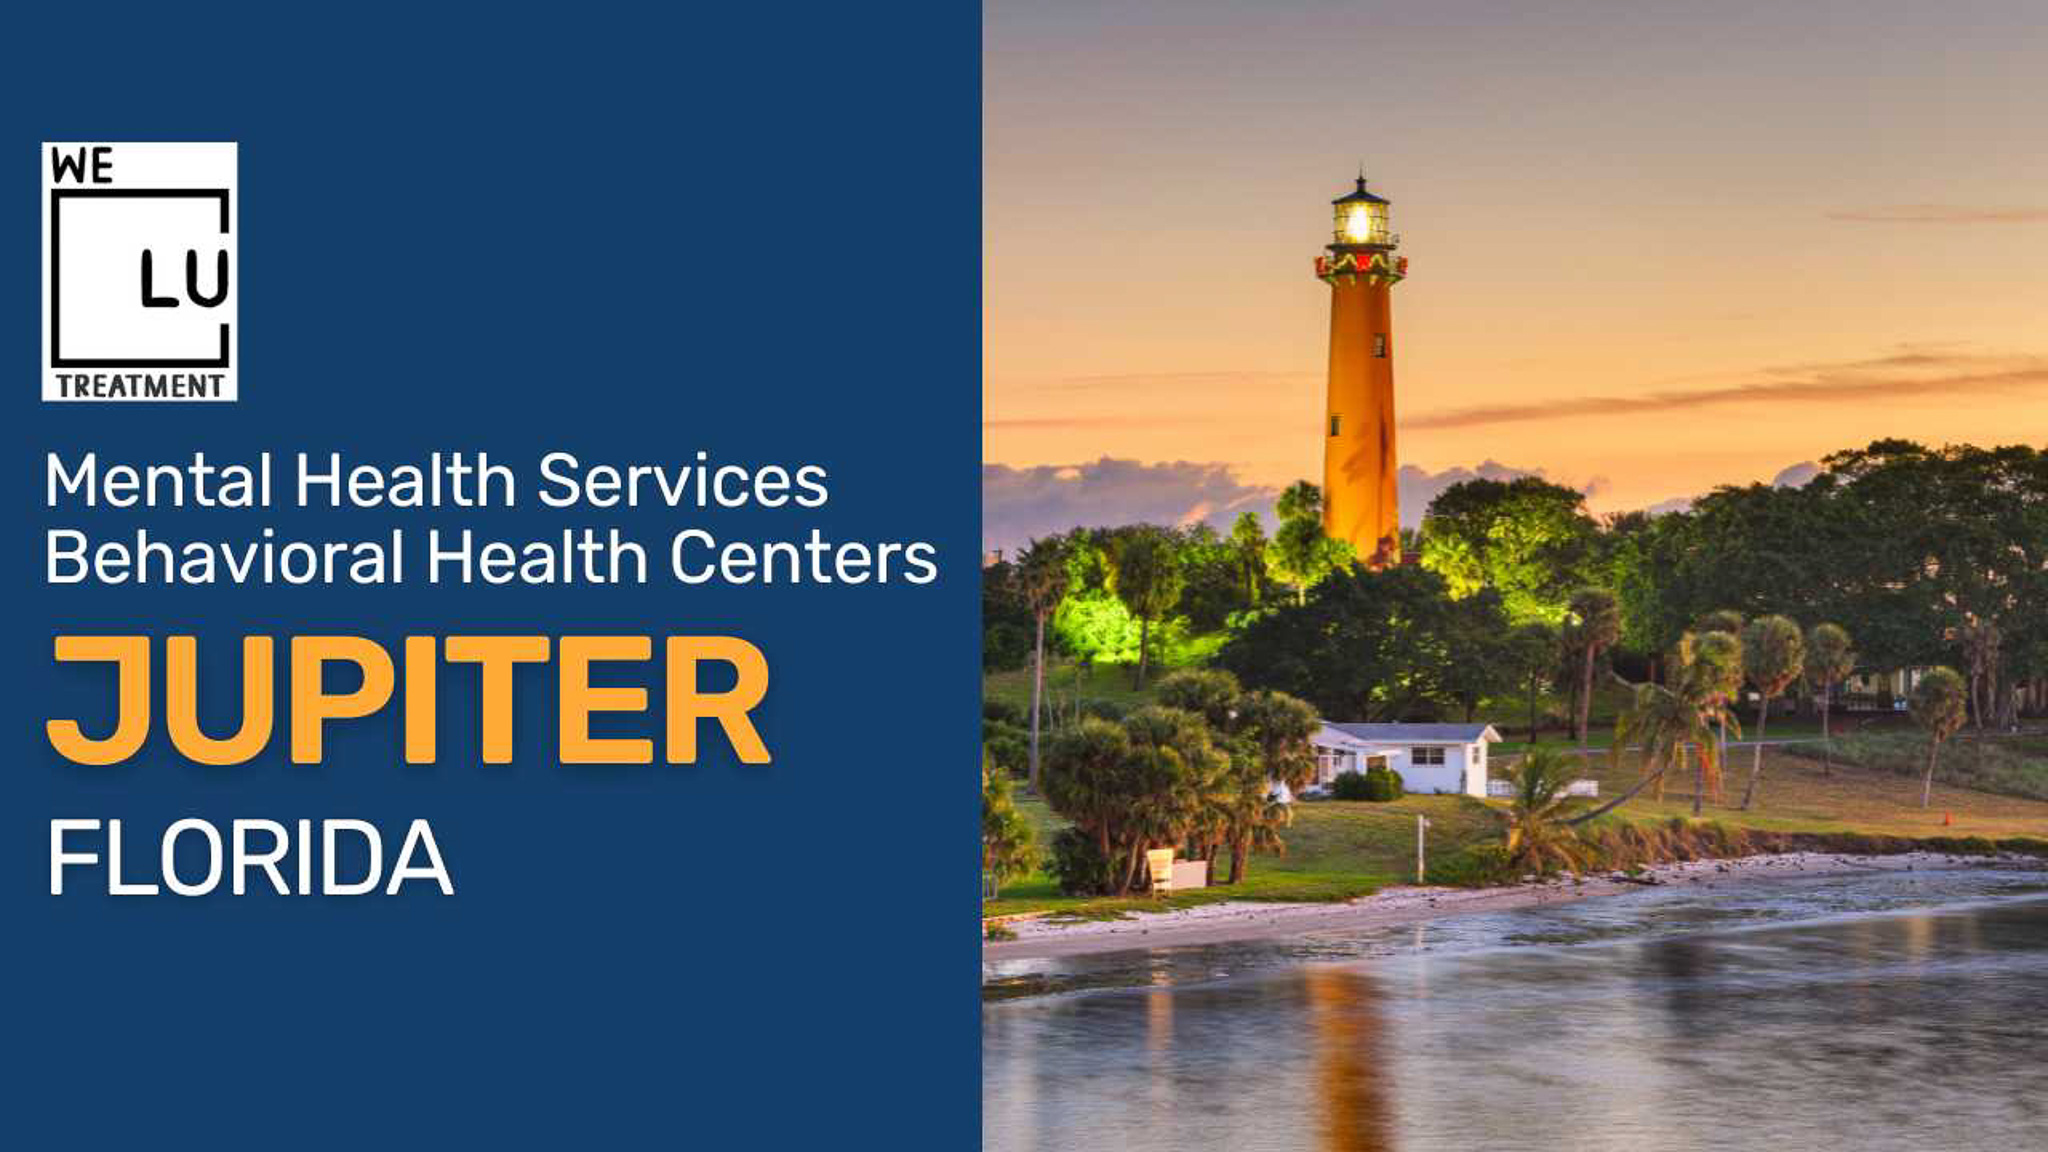 Jupiter FL (MH) We Level Up treatment center for drug and alcohol rehab detox and mental health services - Image 1